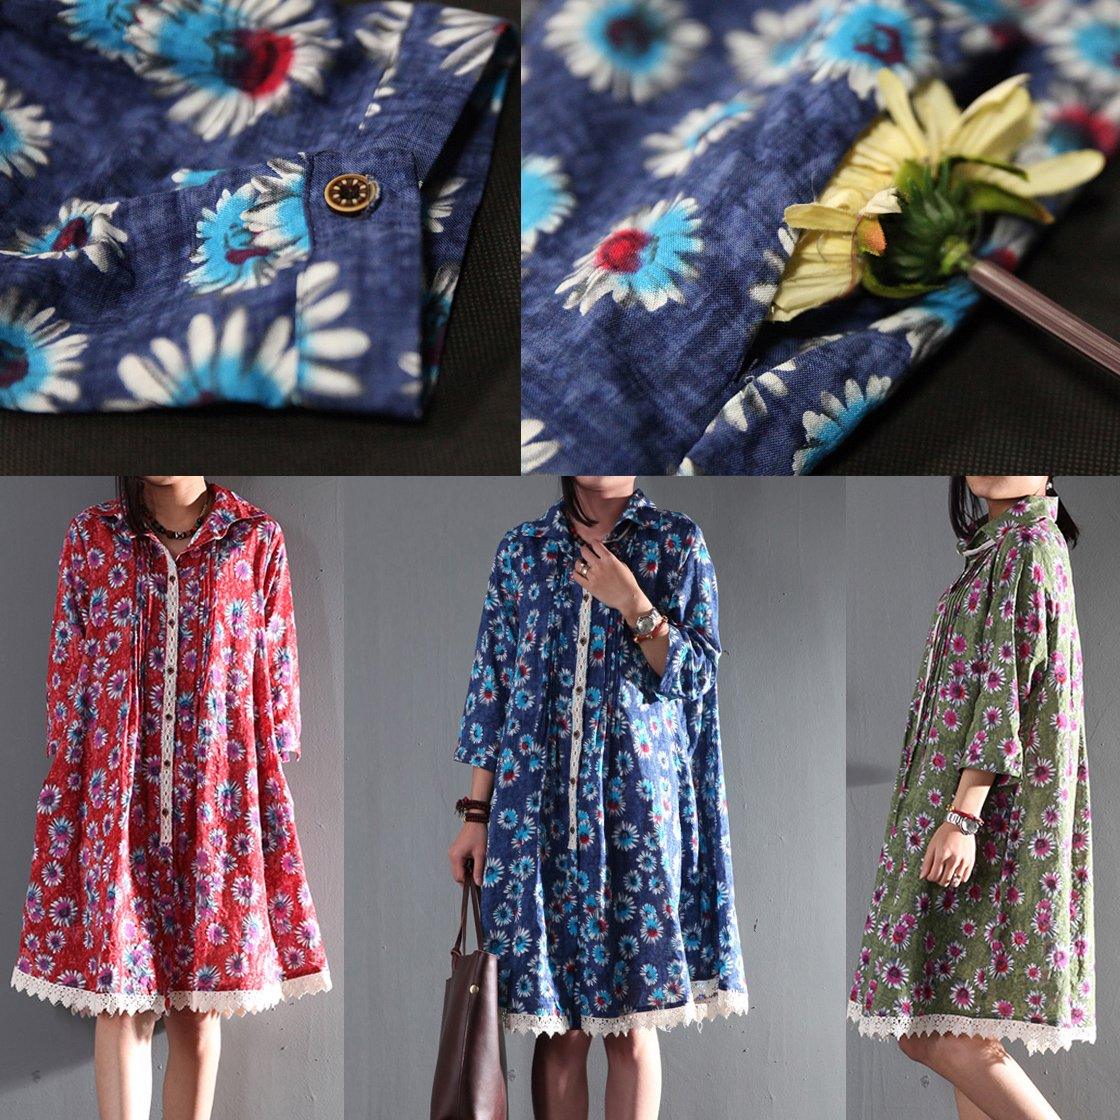 Navy daisy print sundress casual plus size maternity cotton dress linen clothing - Omychic